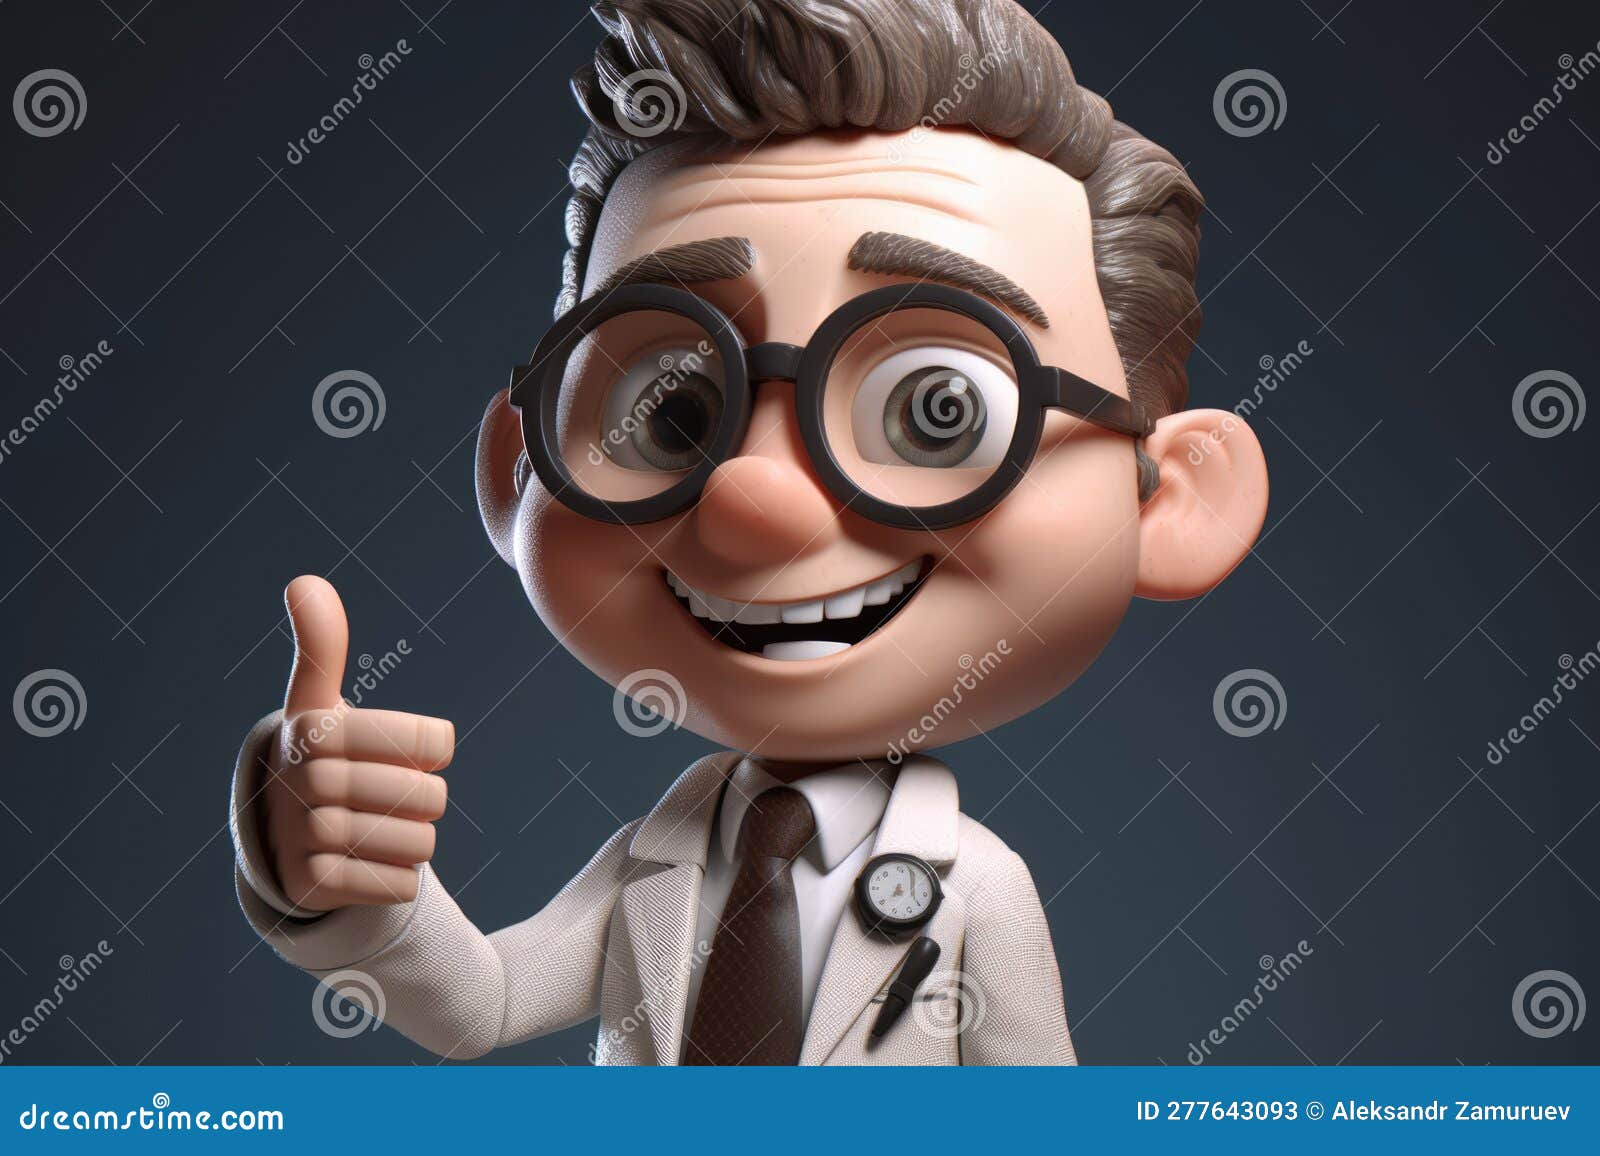 Conjunto de personagens de desenhos animados de médico. conceito